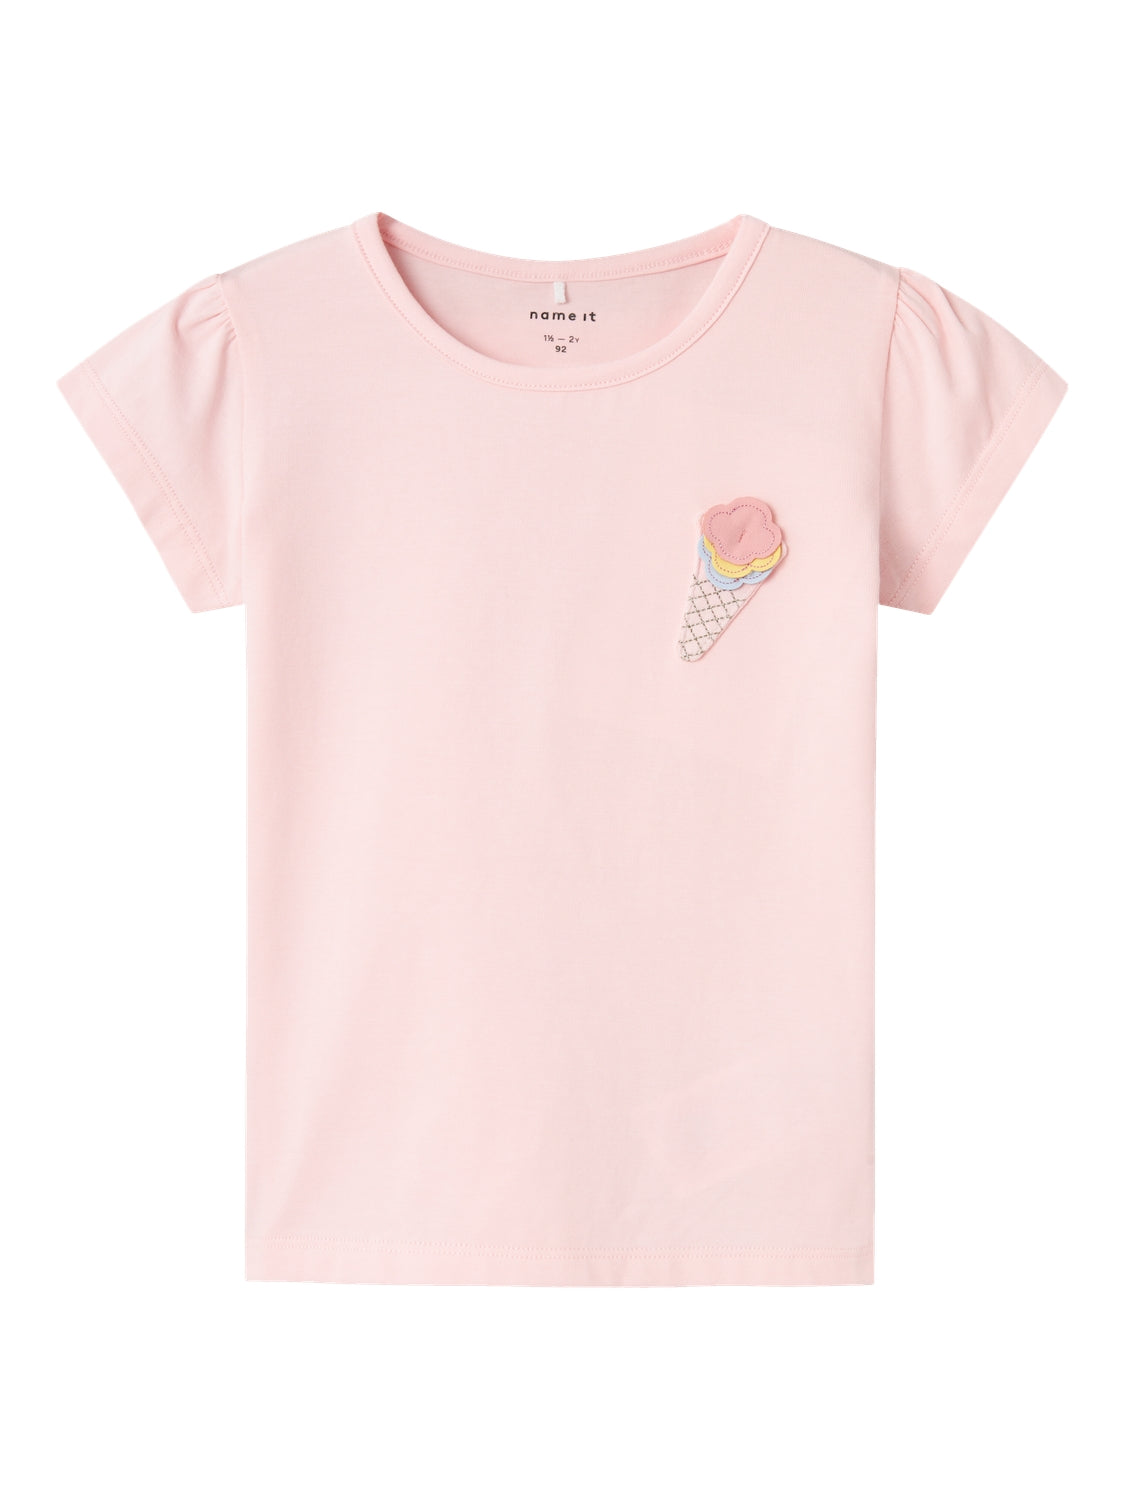 Name It t-shirt kids rosa con patch gelato